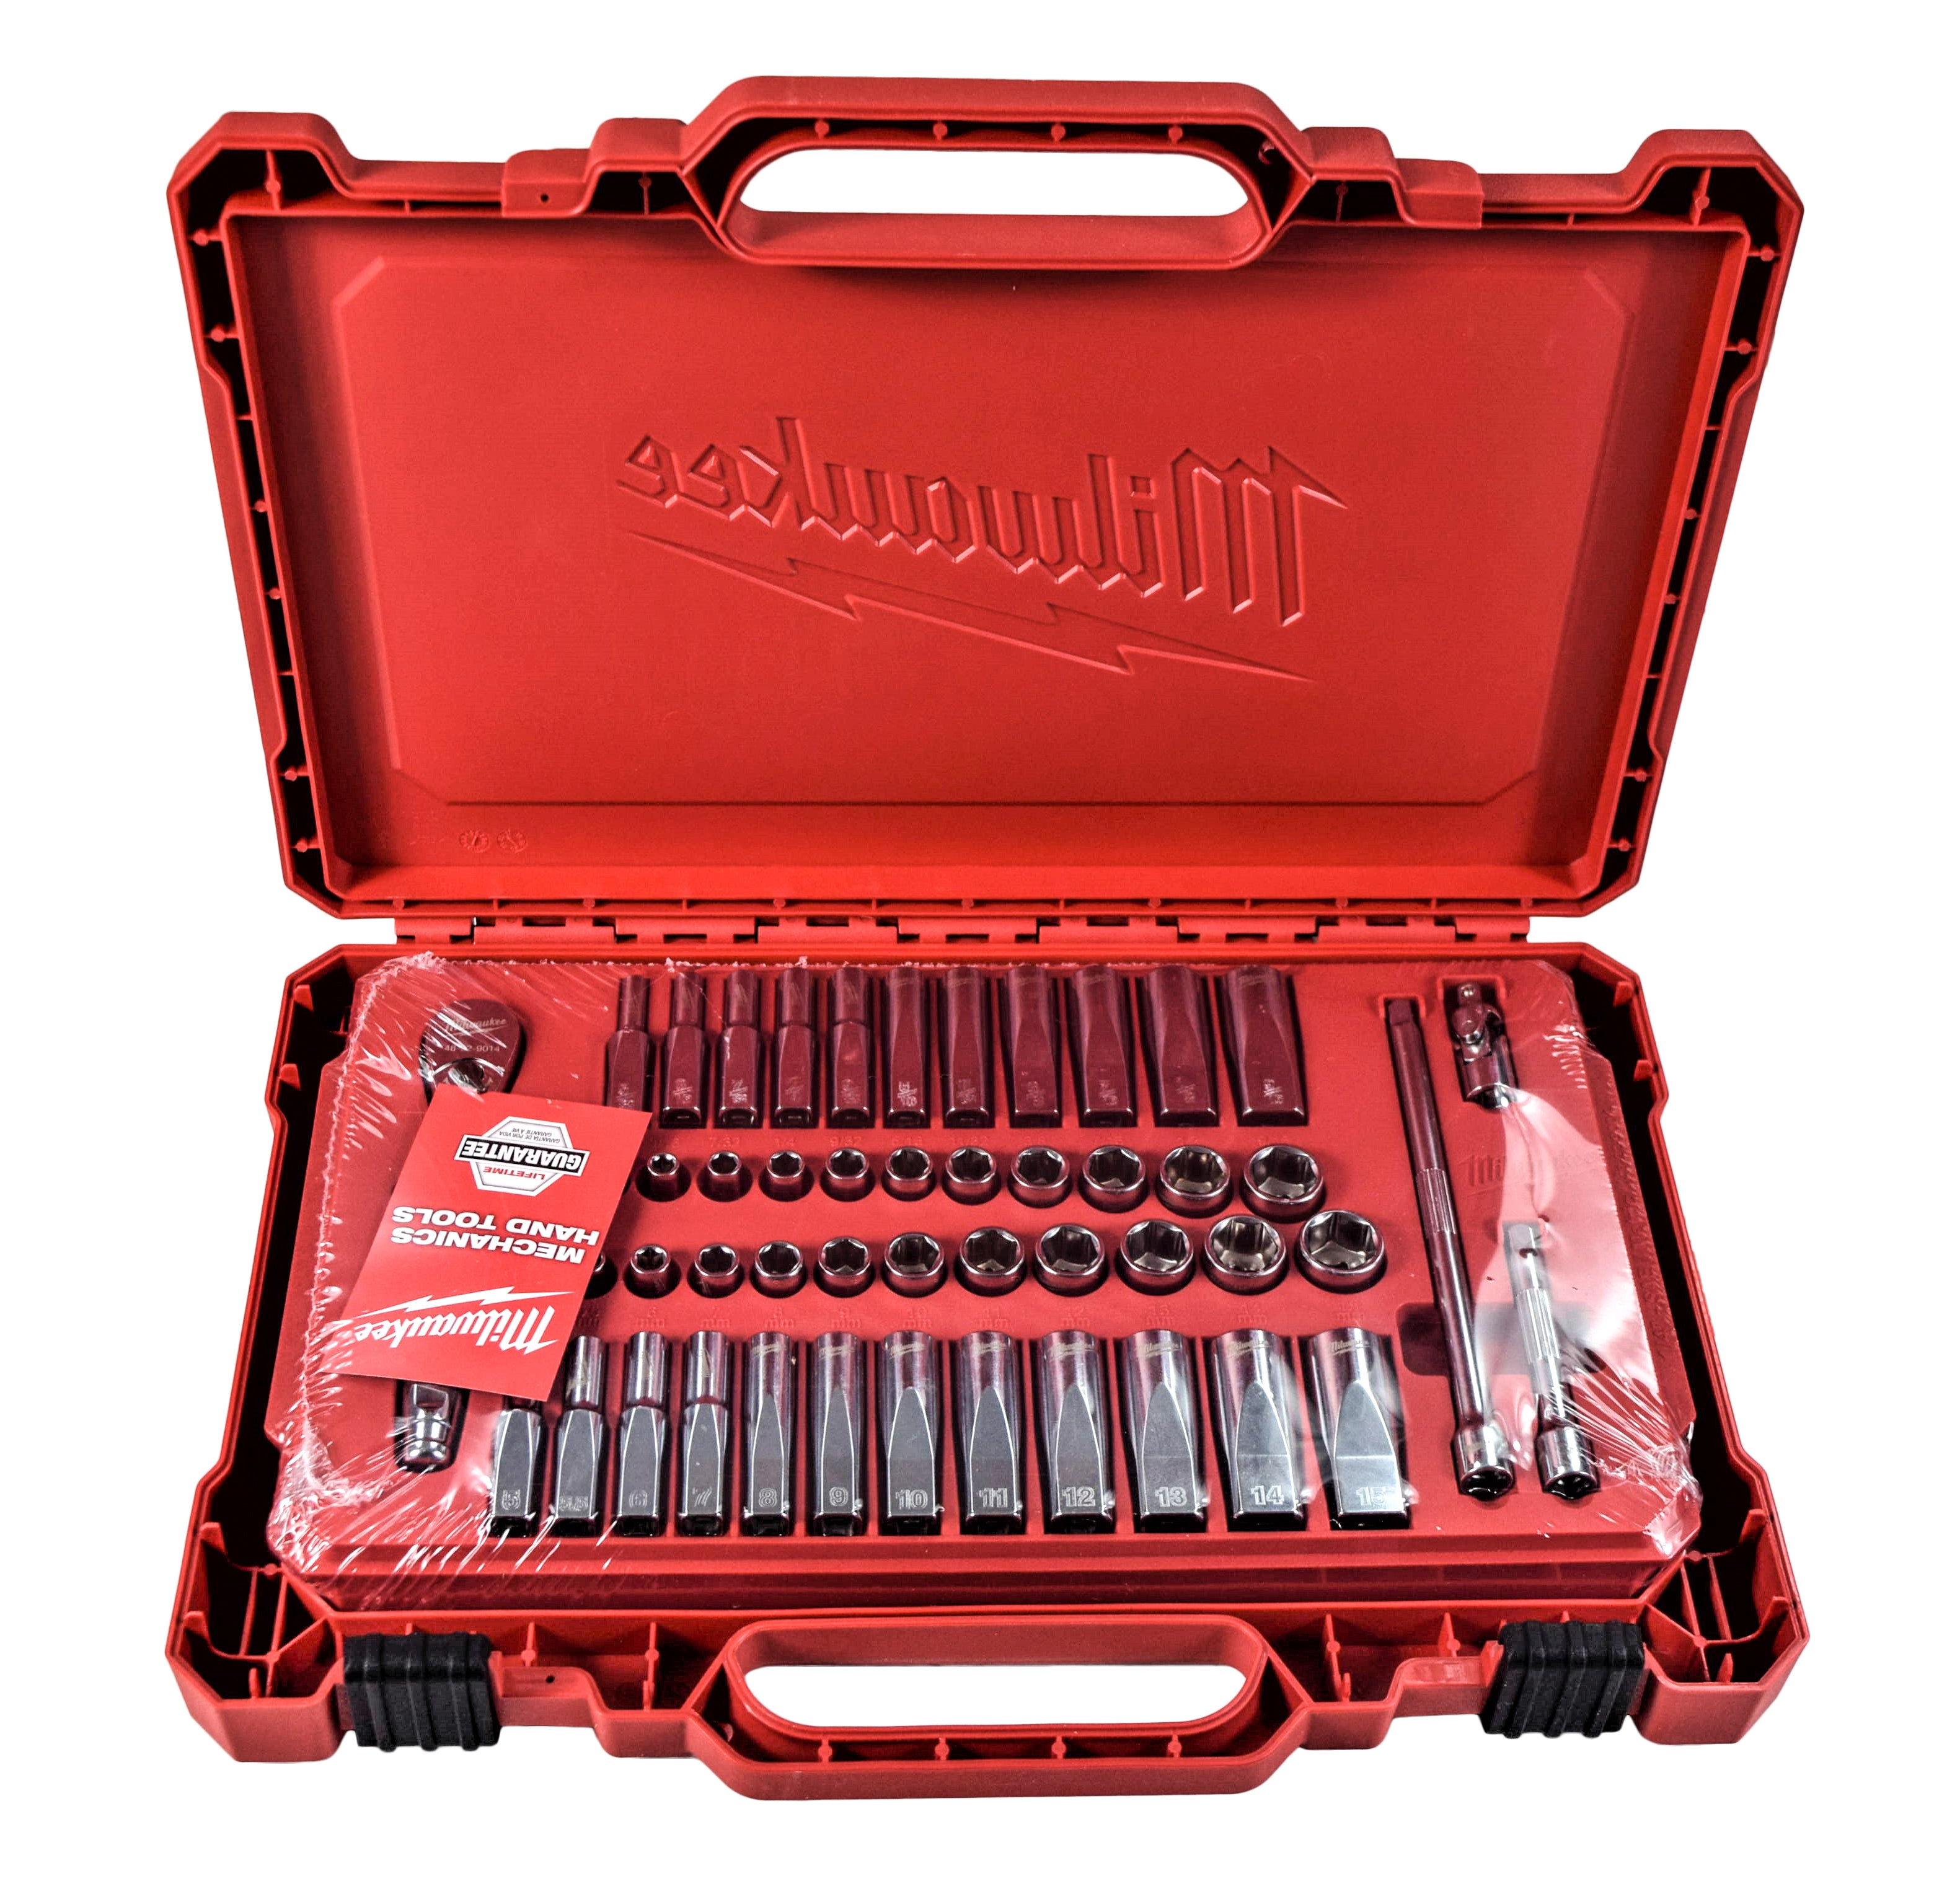 Milwaukee Electric Tools 48-22-9004 1/4in Ratchet & Socket Set - SAE & Metric